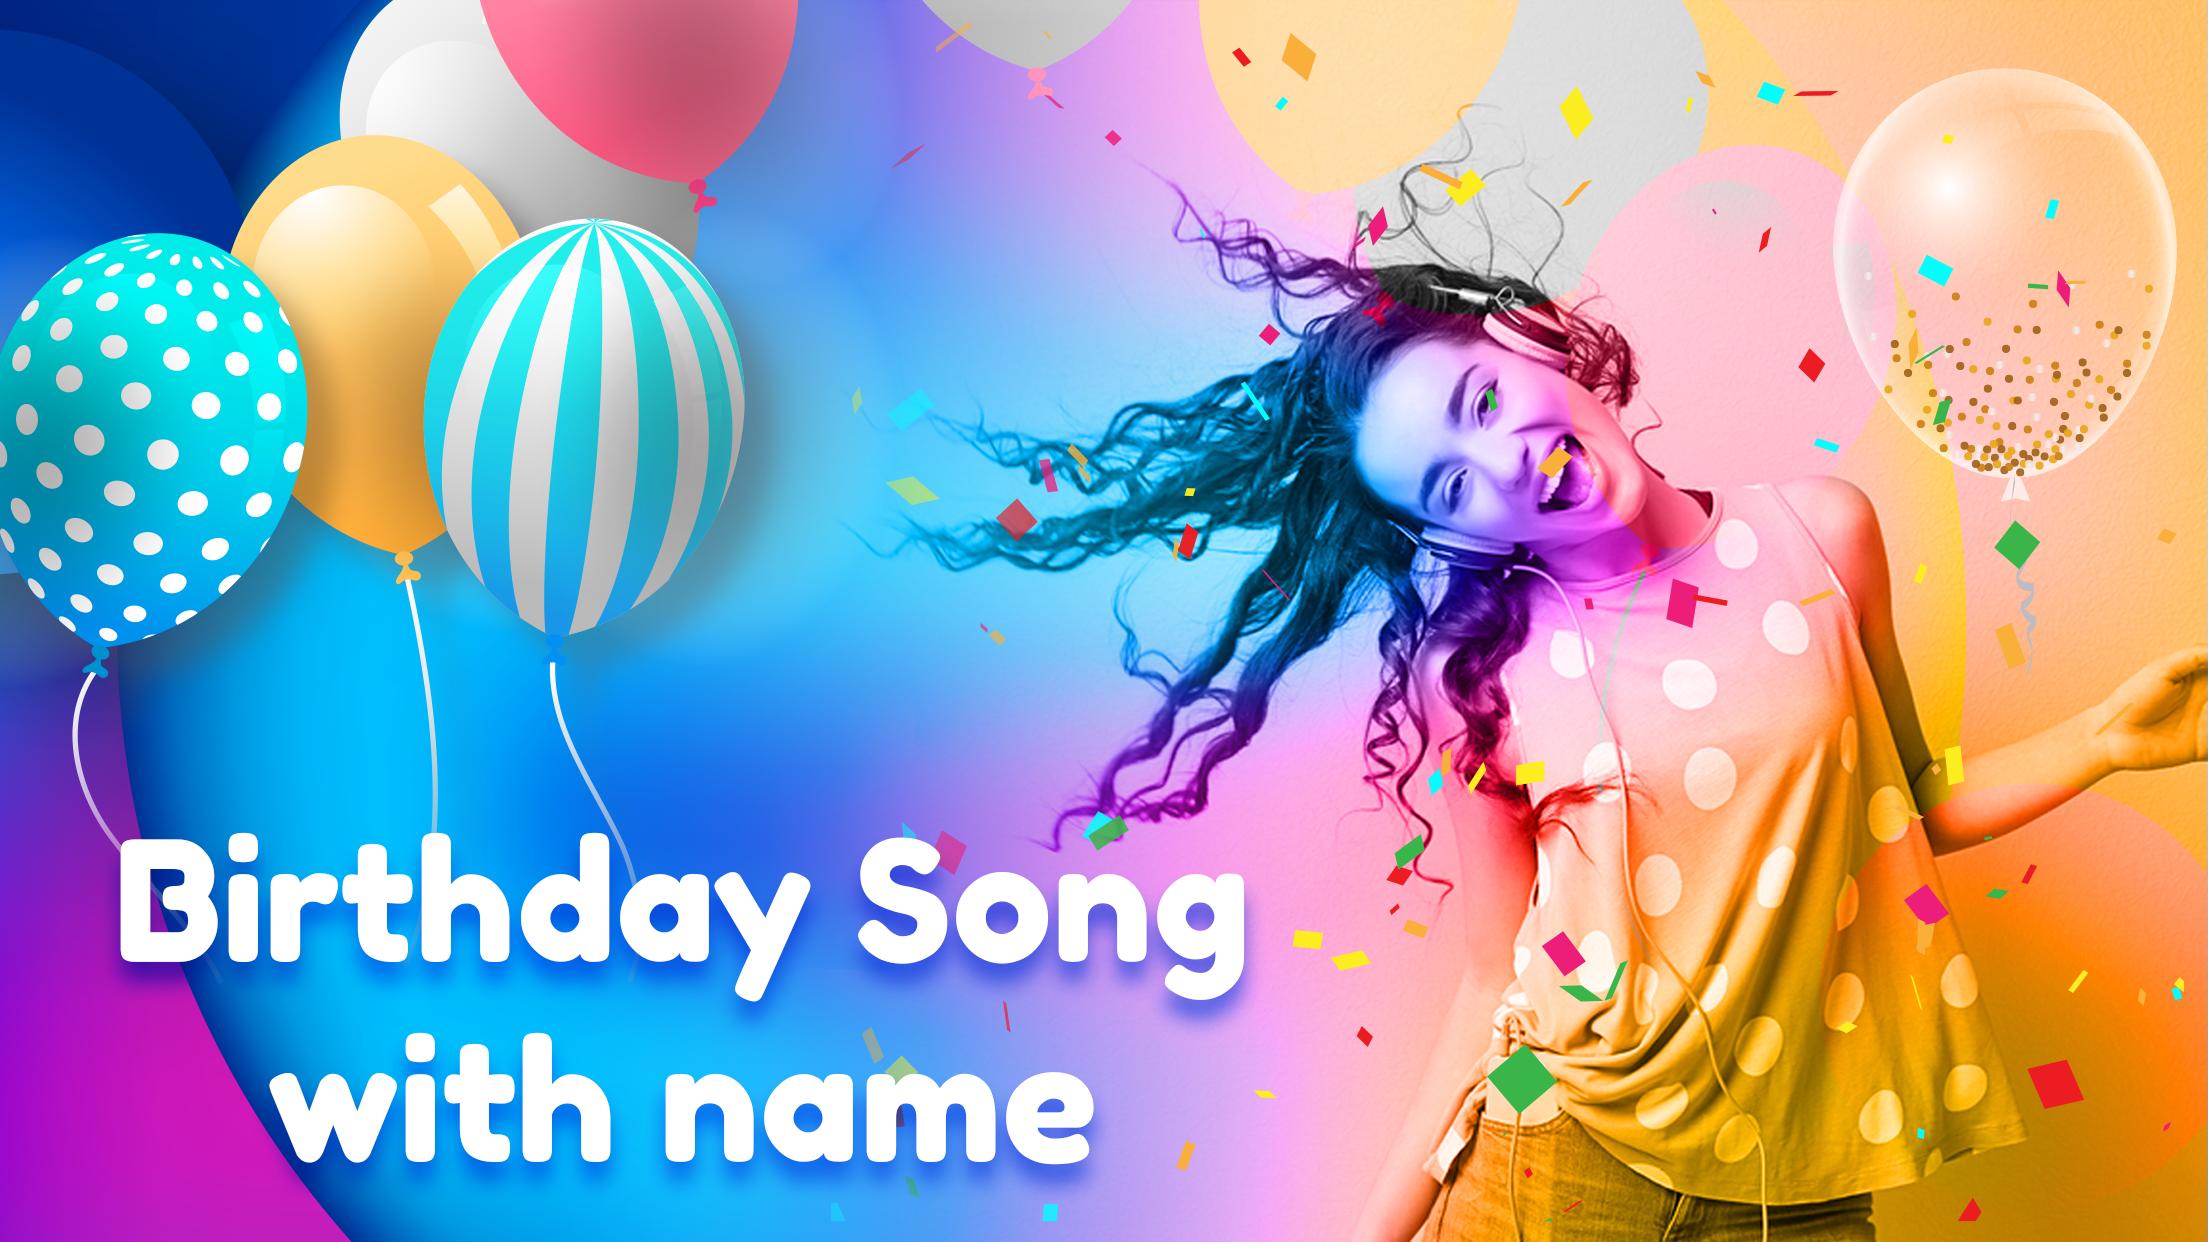 Birthday Song. Happy Birthday песня слушать. 1 Happy Birthday Song with name and photo. Включи Happy Birthday Song.